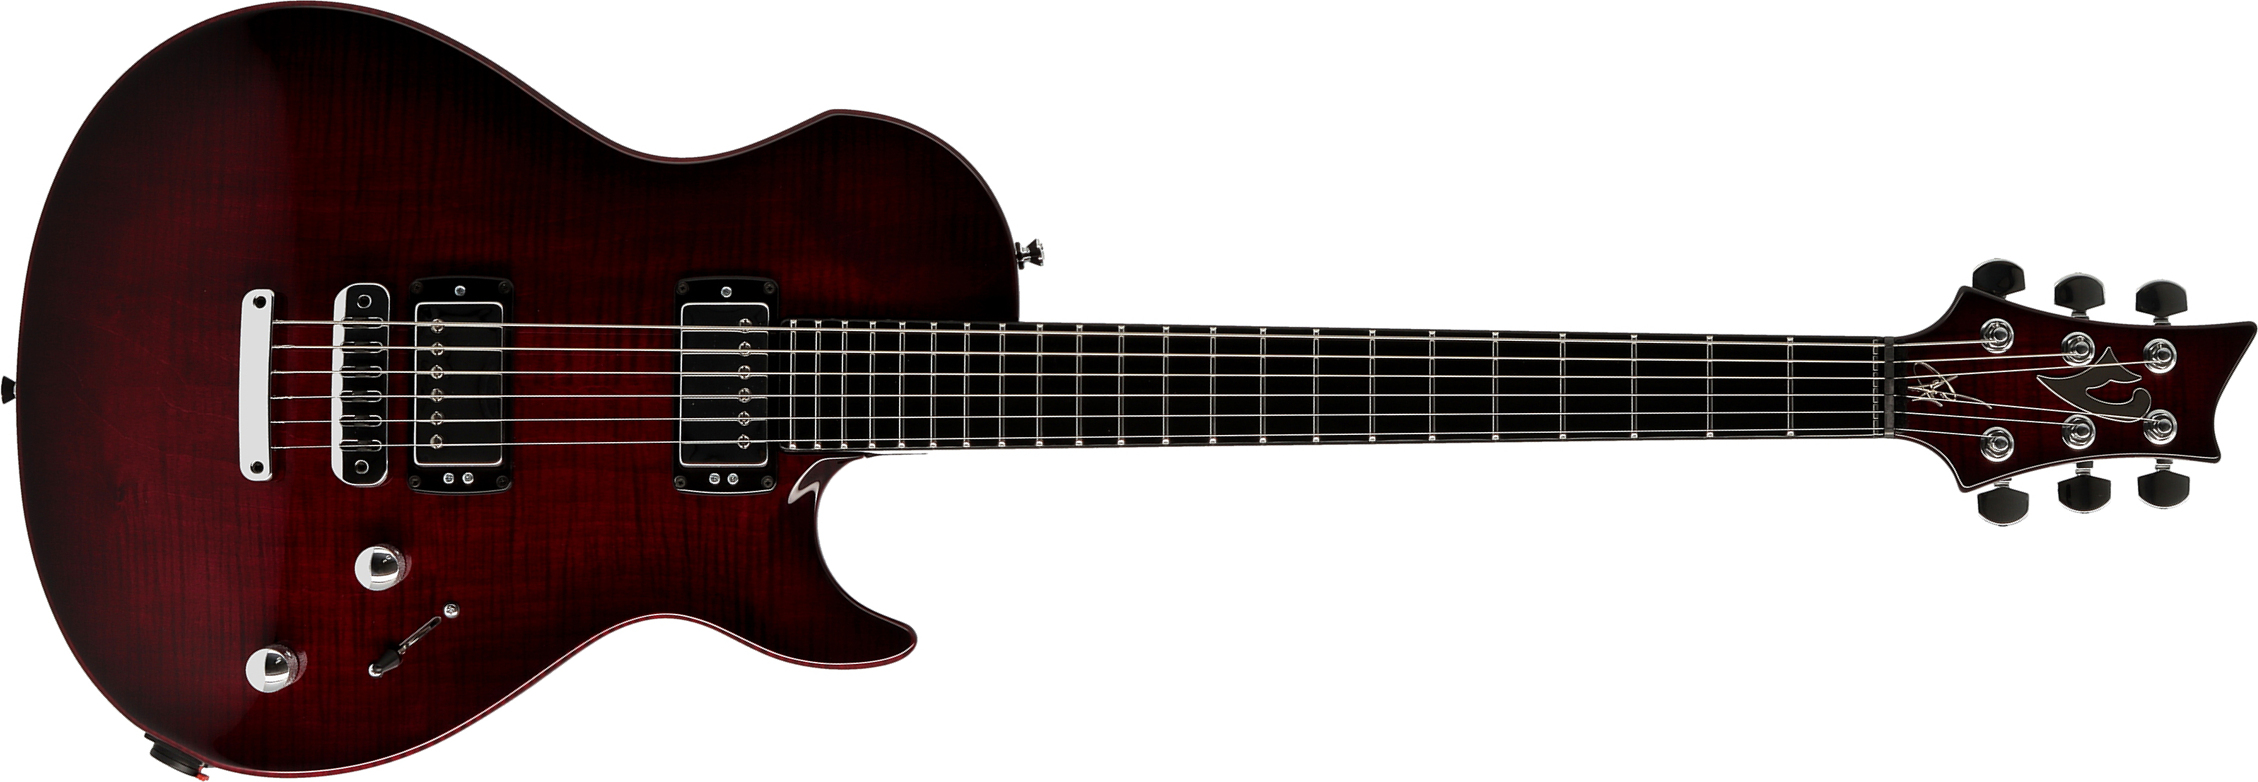 Vigier G.v. Wood Hh Ht Phe - Deep Burgundy Fade - Enkel gesneden elektrische gitaar - Main picture